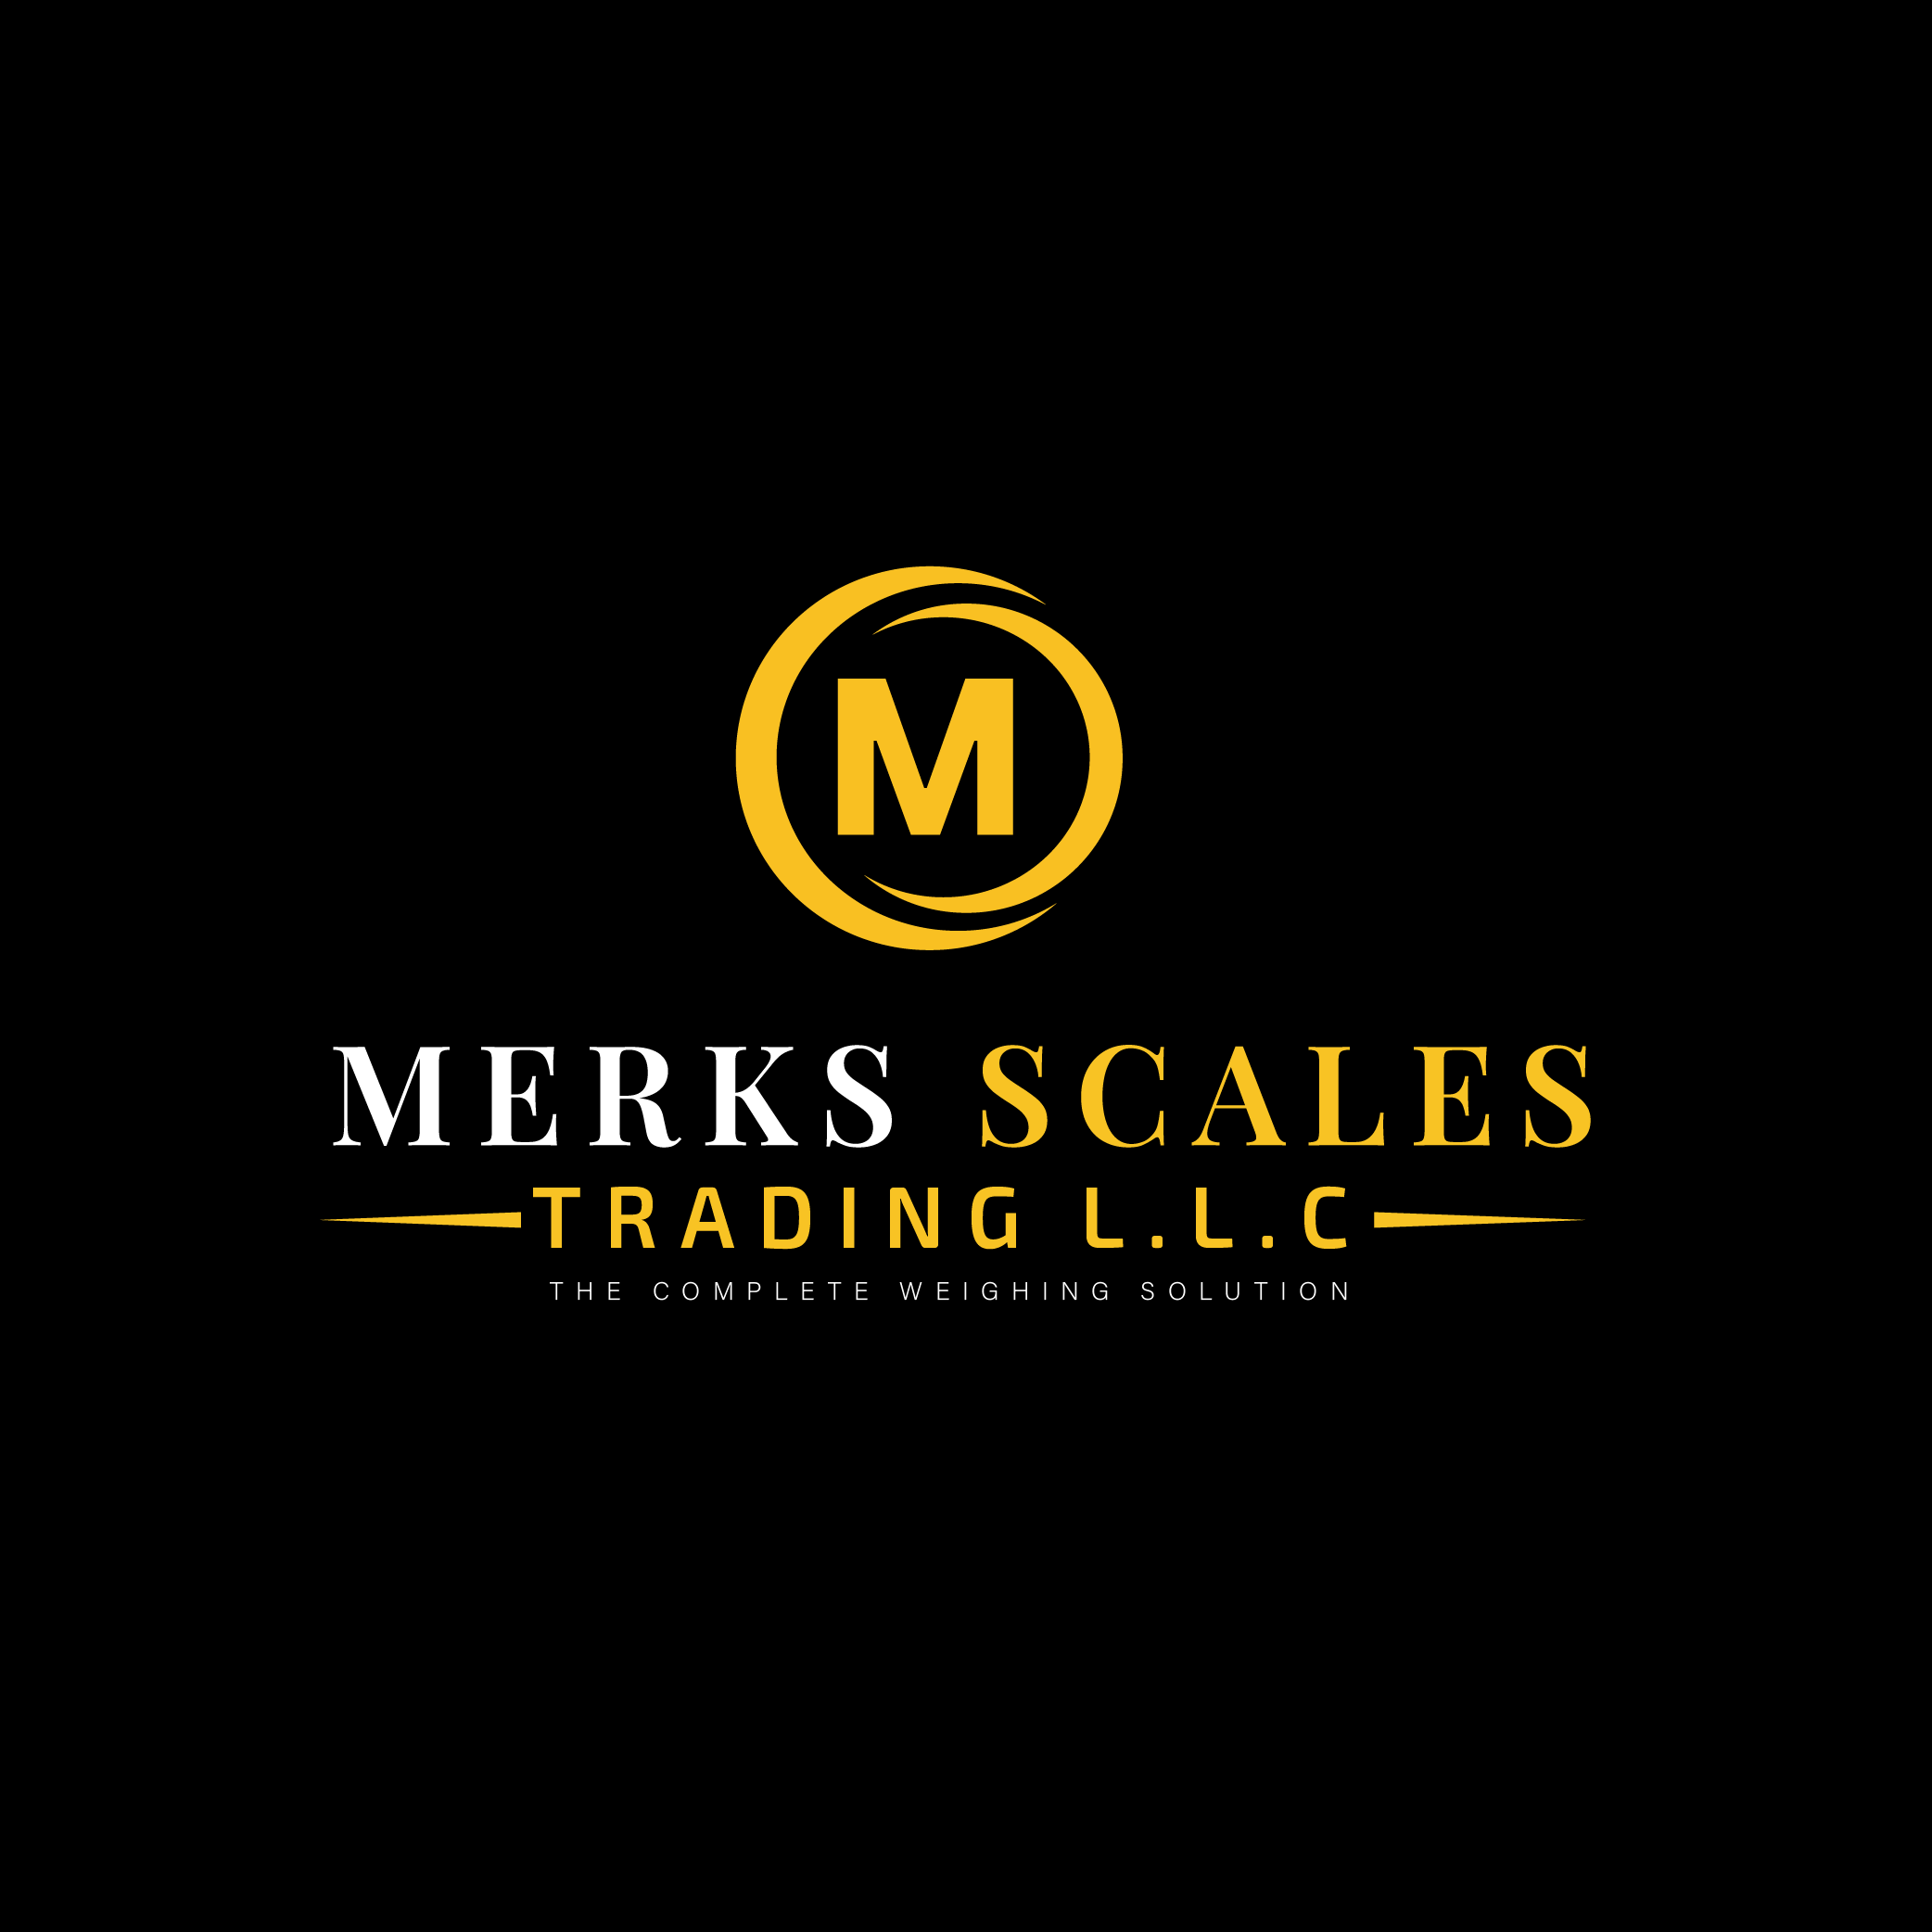 Merks Scales Trading LLC